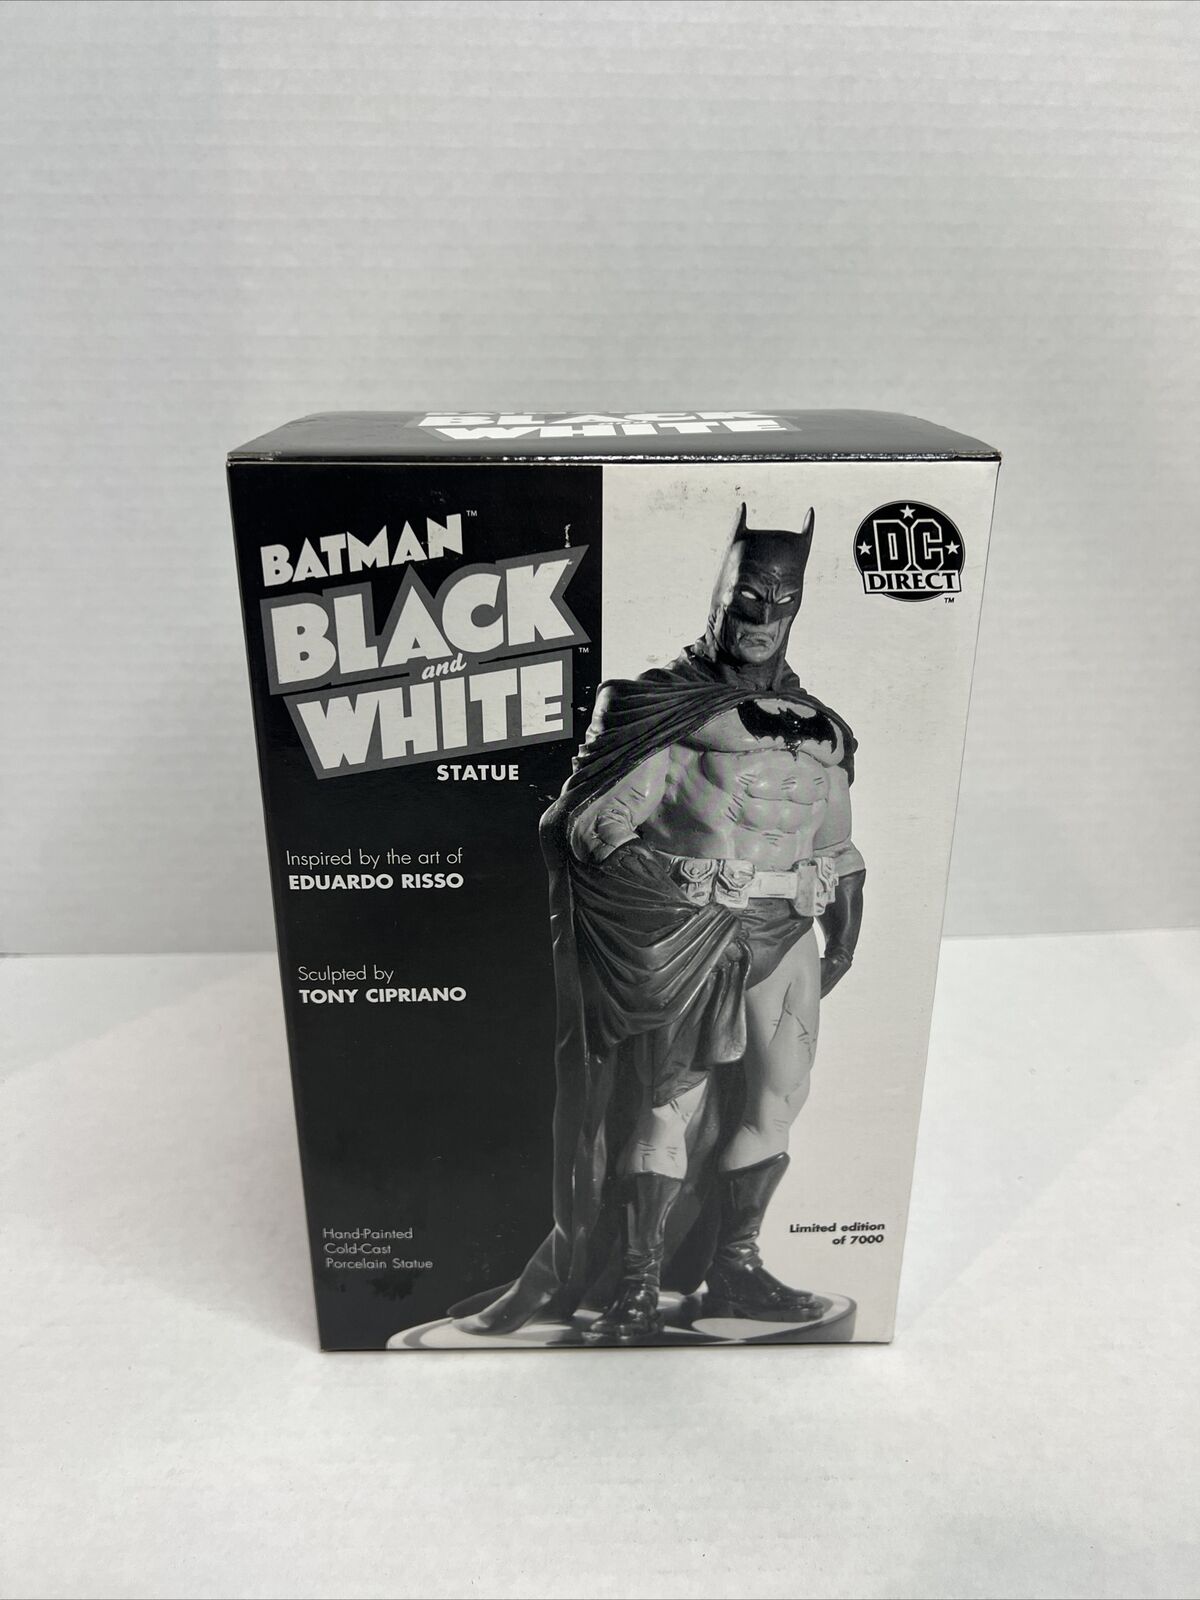 Batman Black and White DC Direct Mini-Statue by Eduardo Risso 0872/7000 - 1st Ed